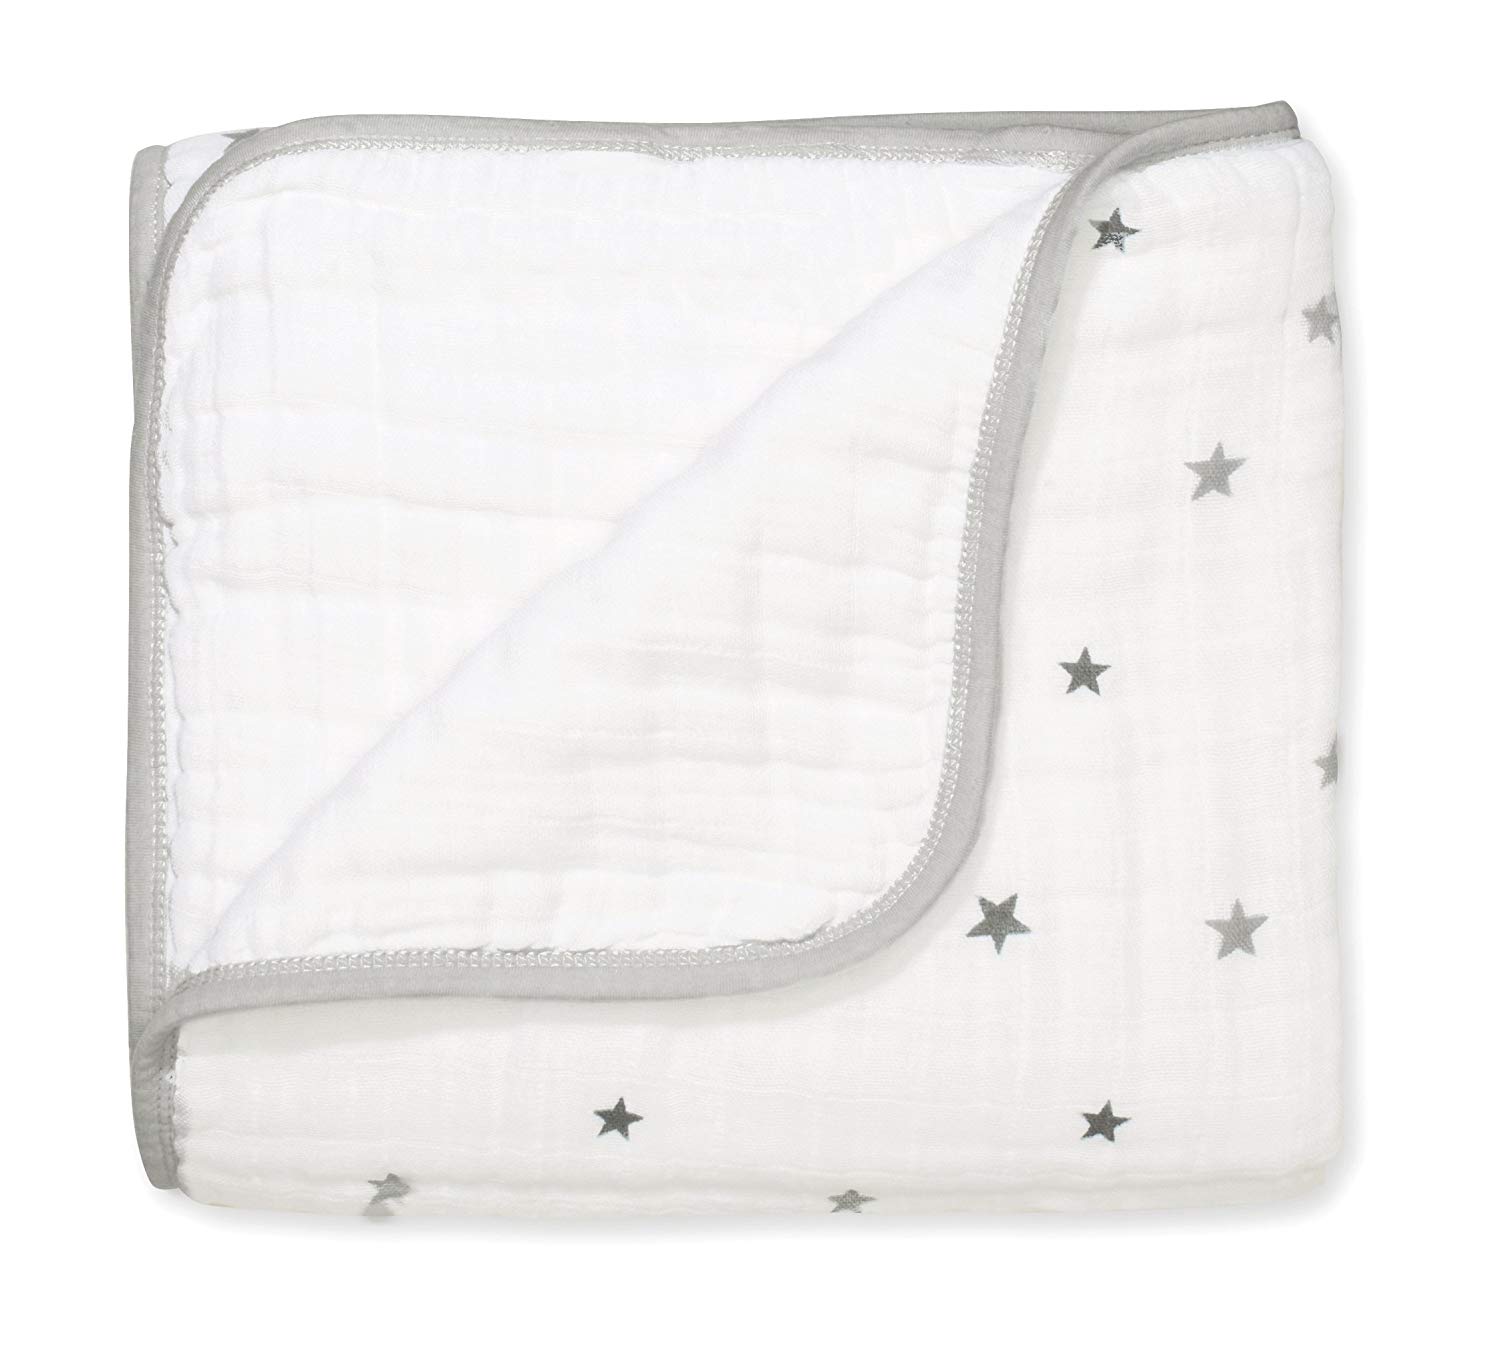 aden + anais Dream Blanket, 4 Layers, 100% Cotton Muslin, 120 cm x 120 cm, Twinkle